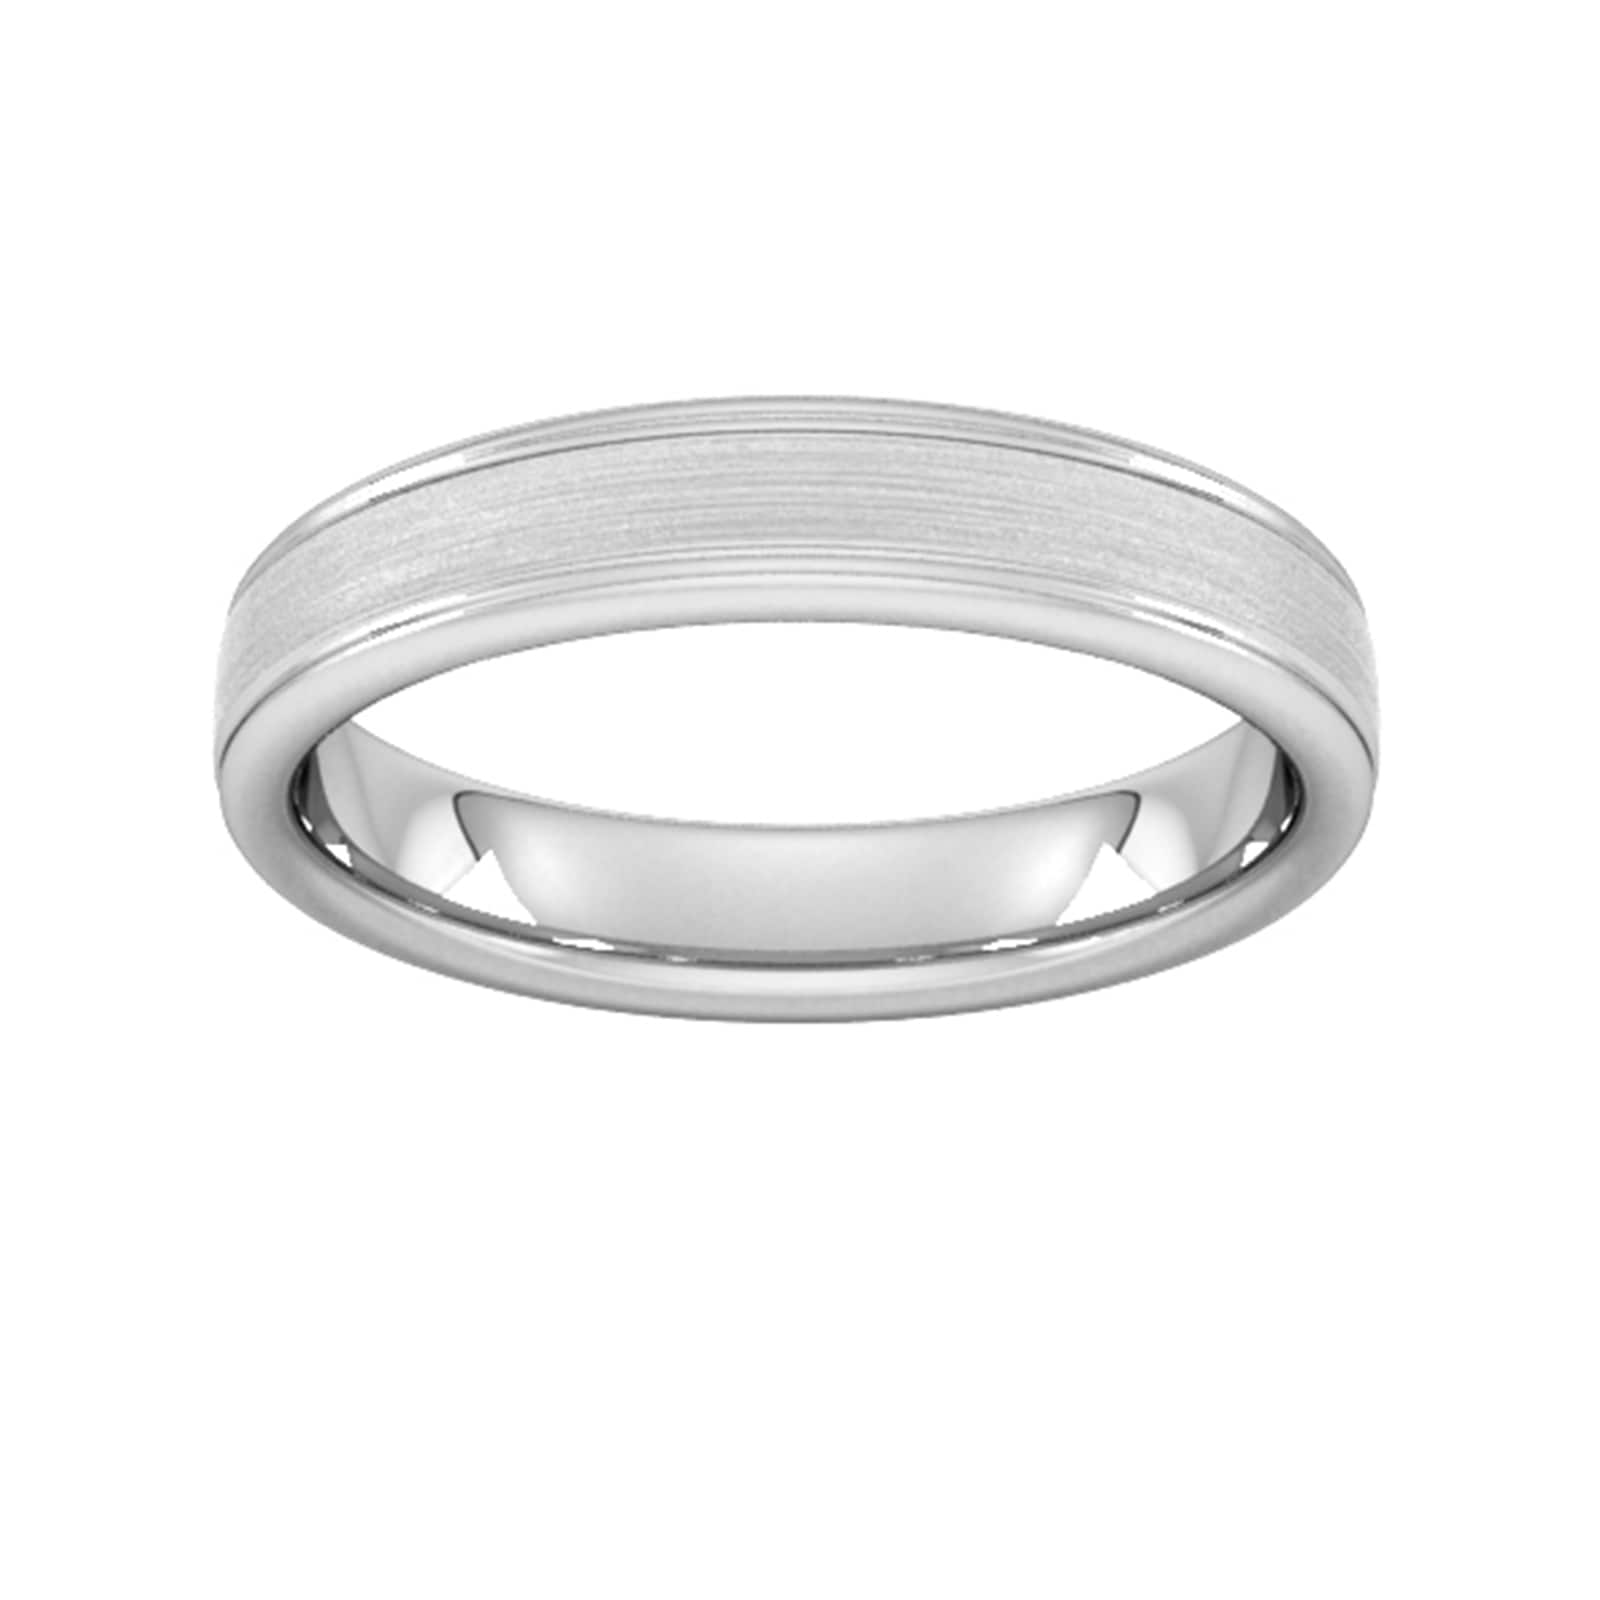 4mm Slight Court Heavy Matt Centre With Grooves Wedding Ring In 18 Carat White Gold - Ring Size Z